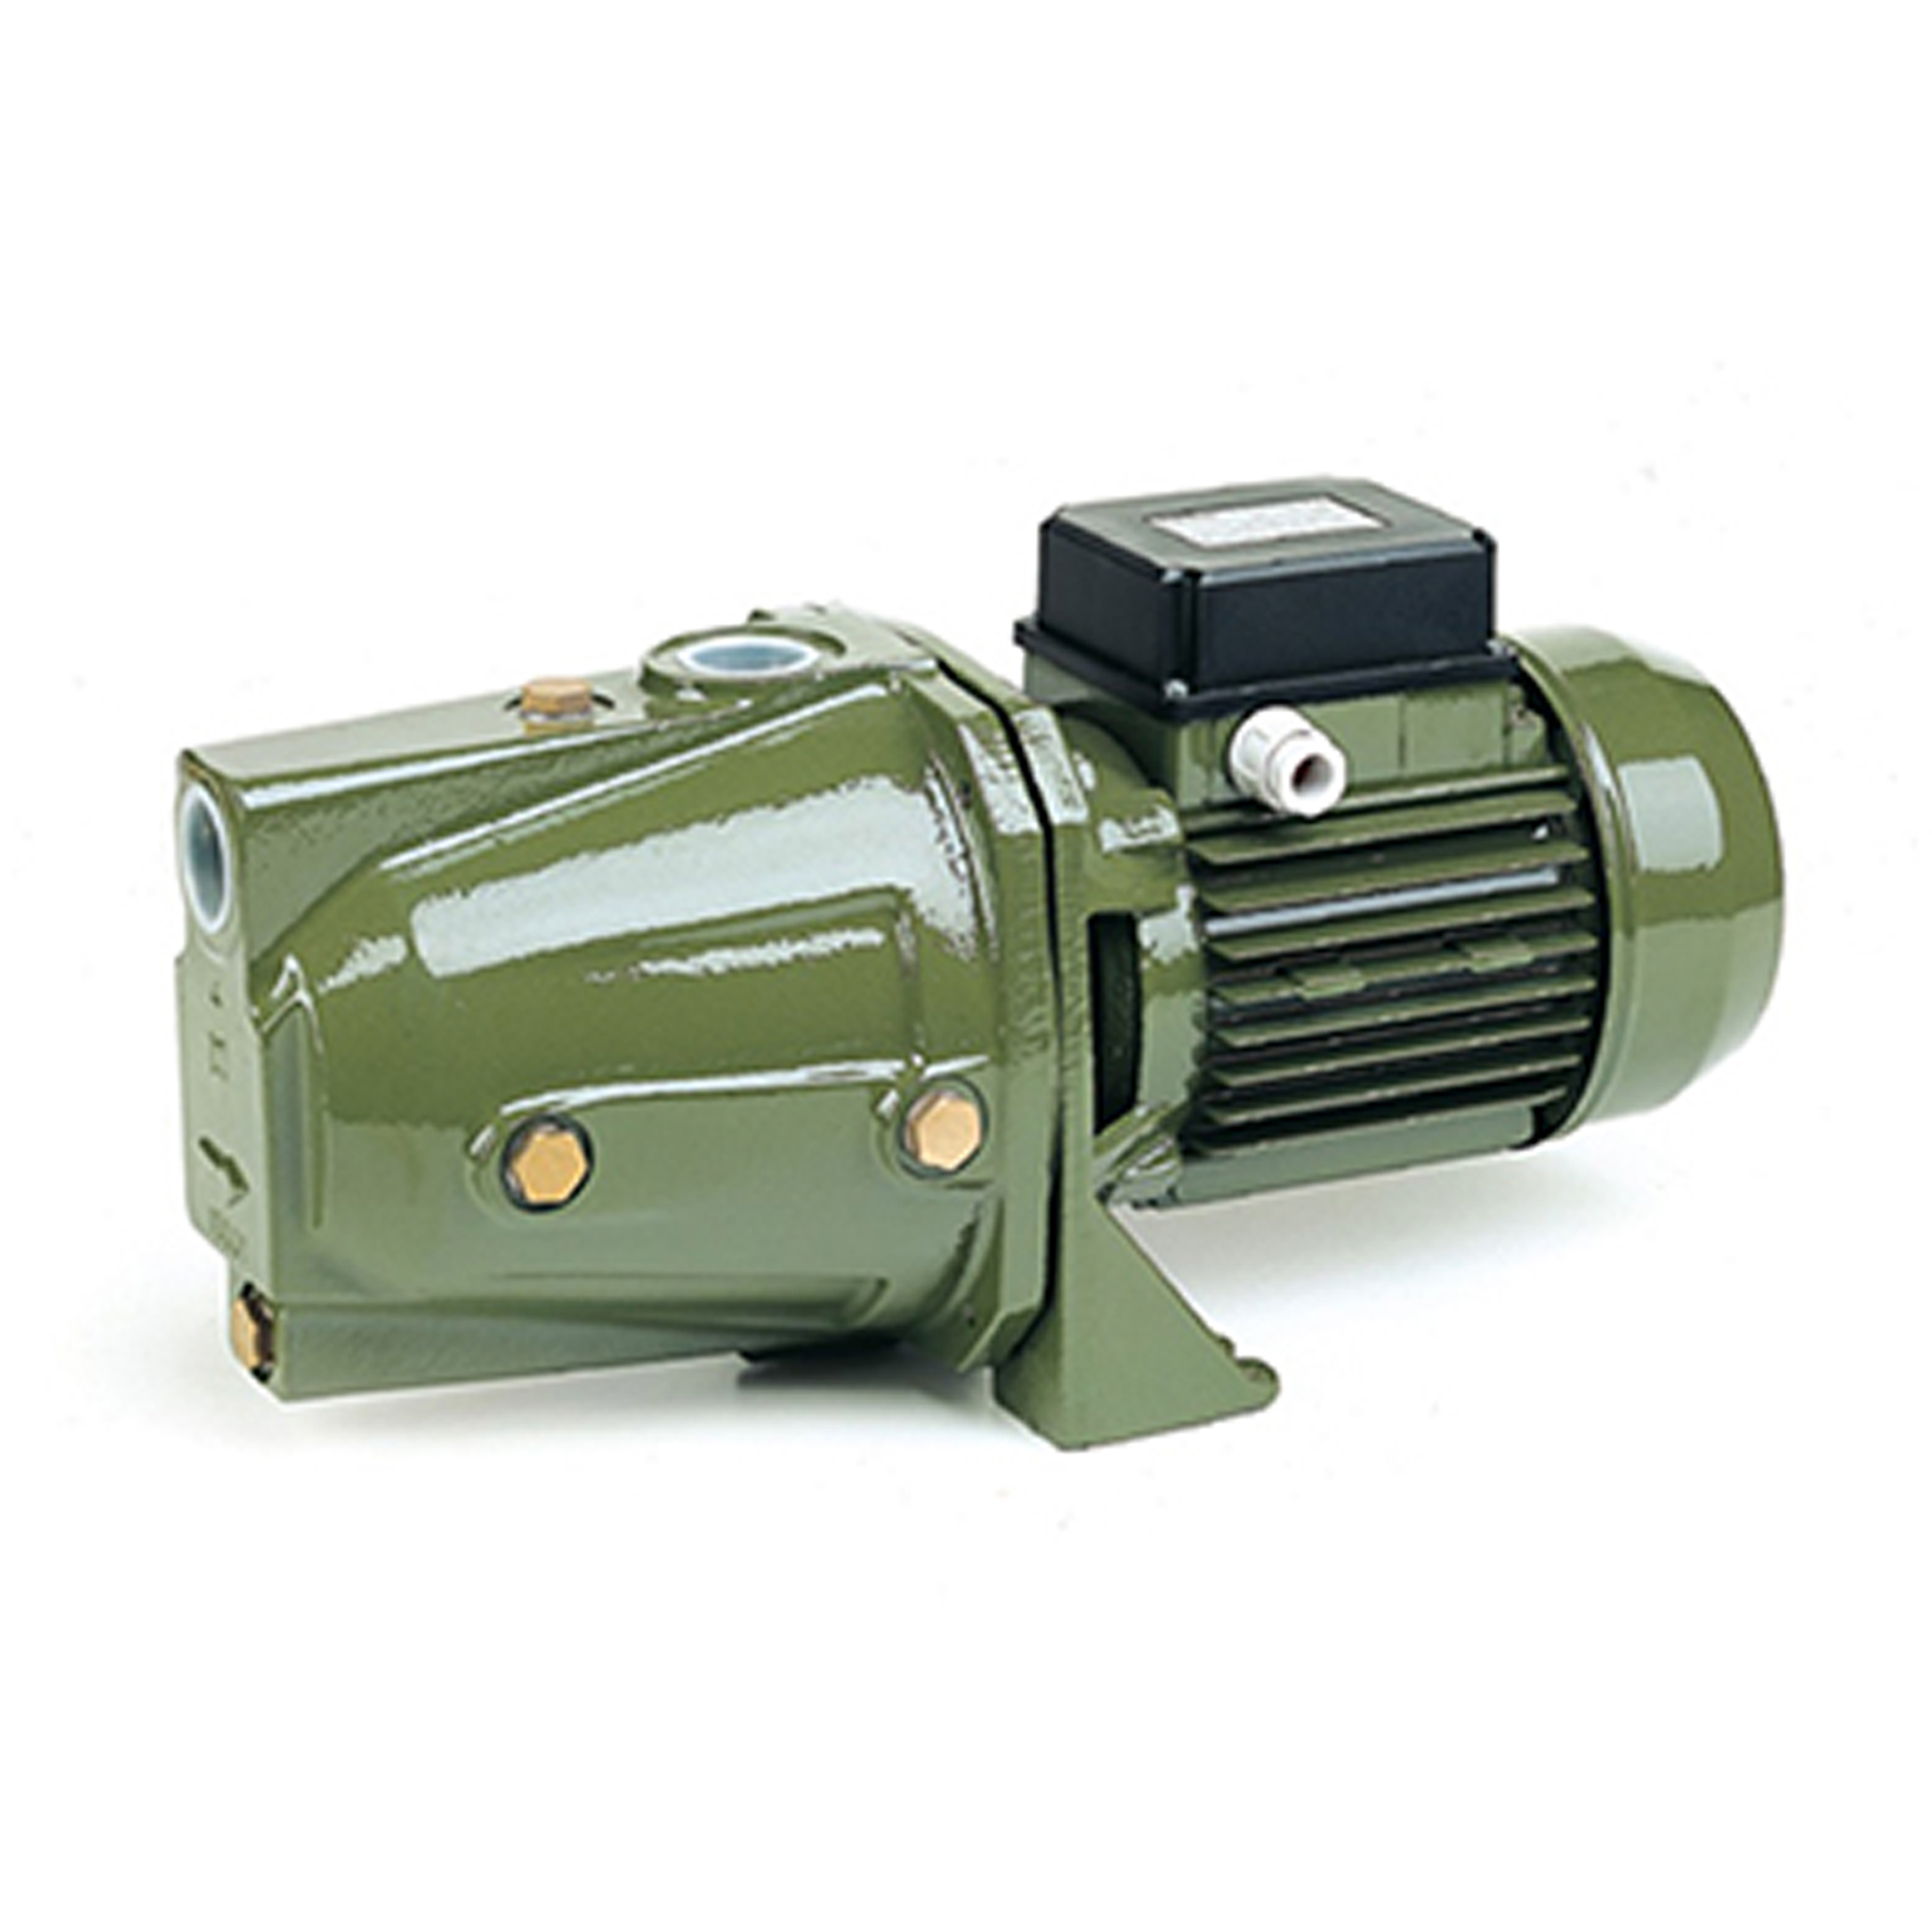 Max 800W 230V Garden Water Booster Pump Draper 55L/Min 64987 